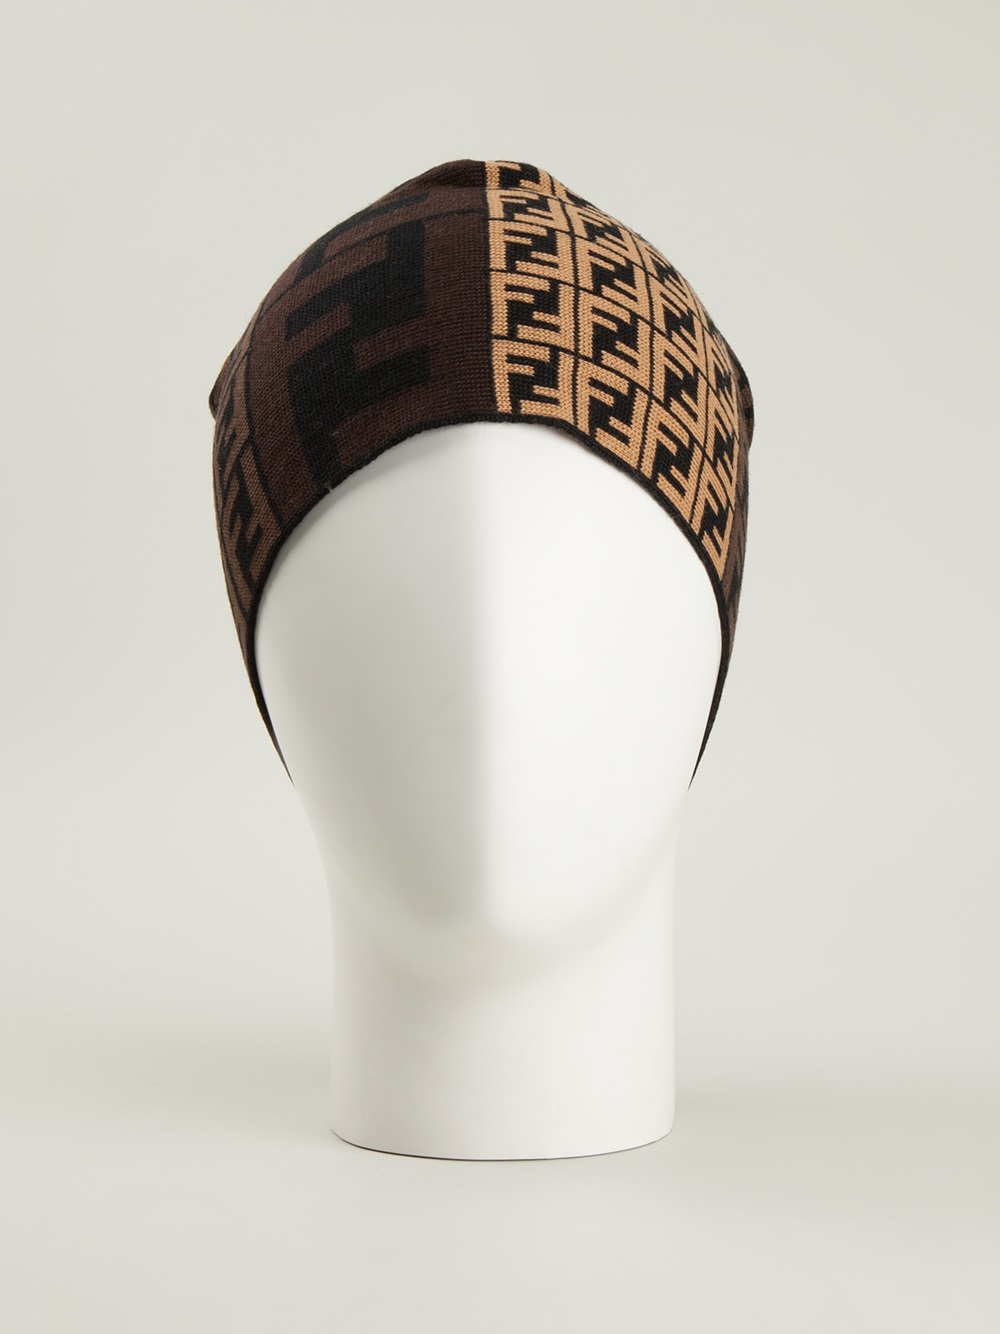 Fendi Monogram Beanie Hat in Brown for Men - Lyst